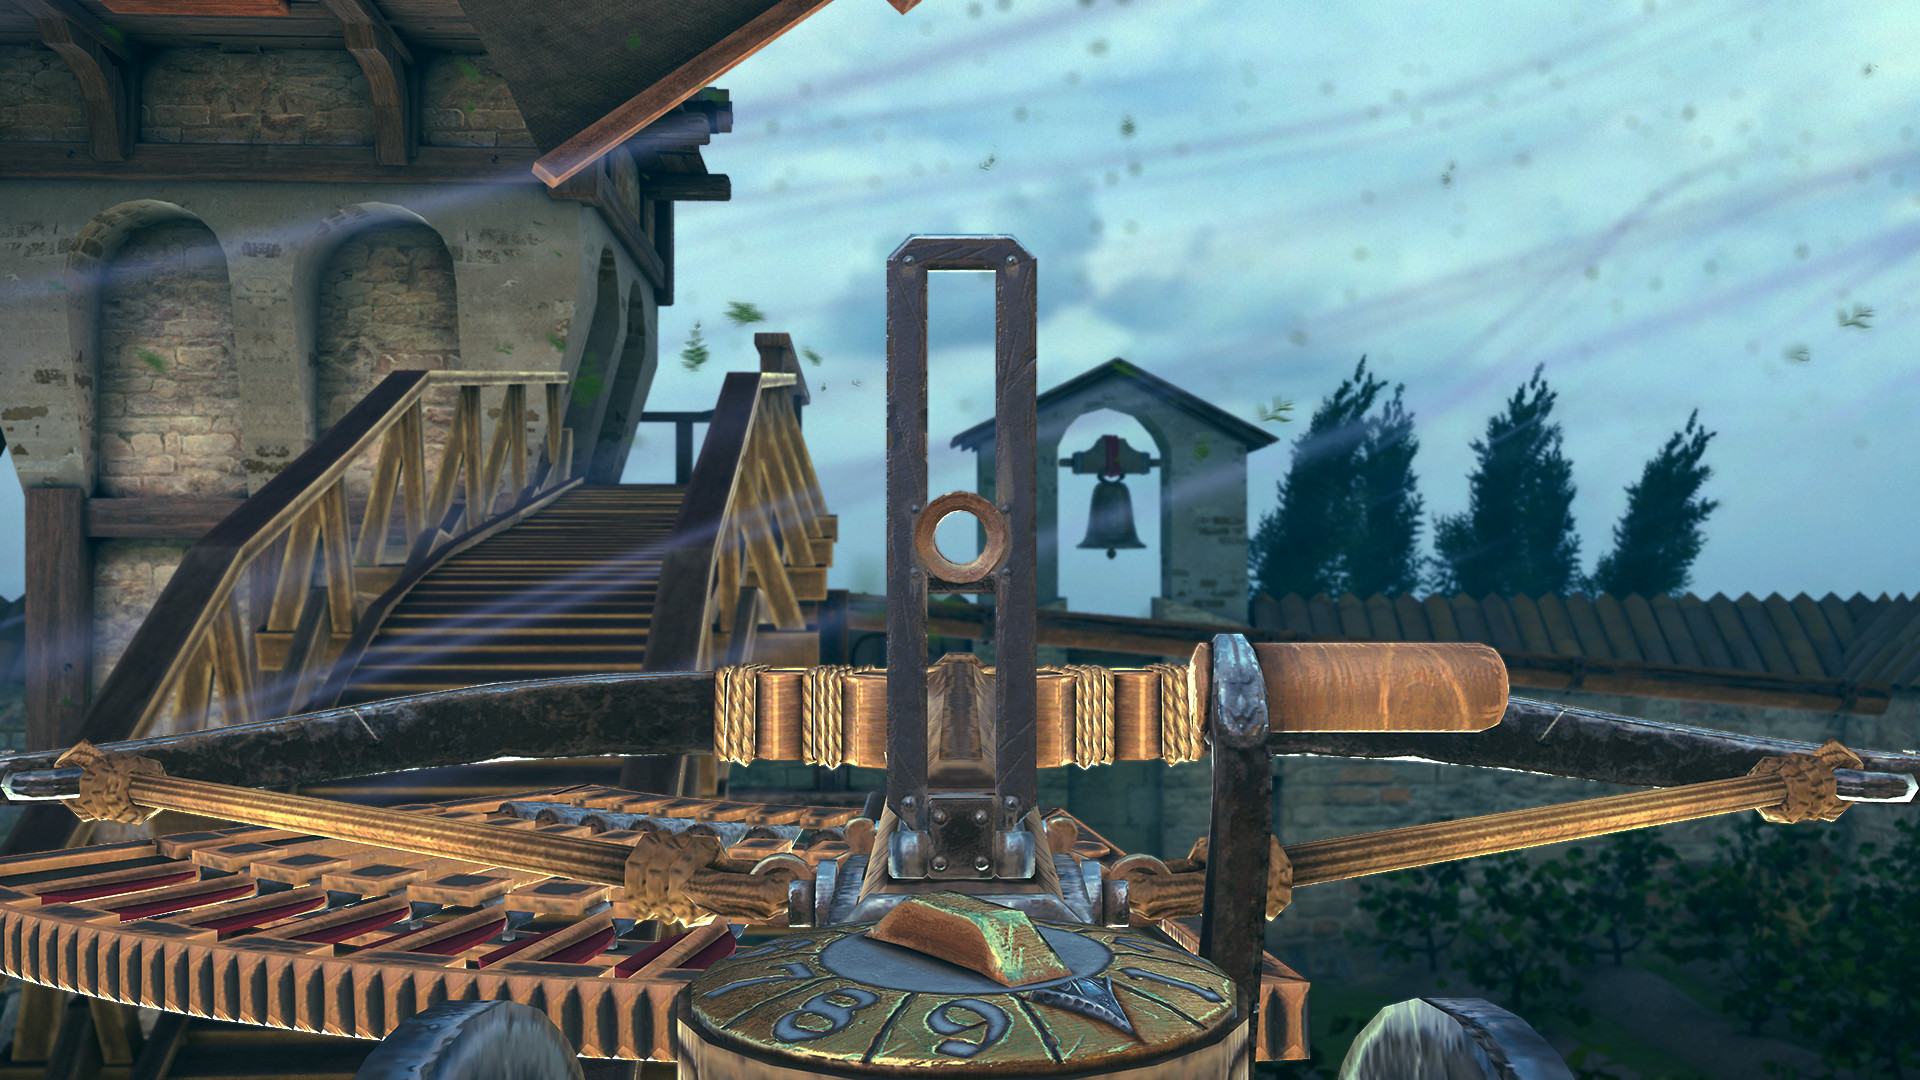 The House of Da Vinci 3 on Steam